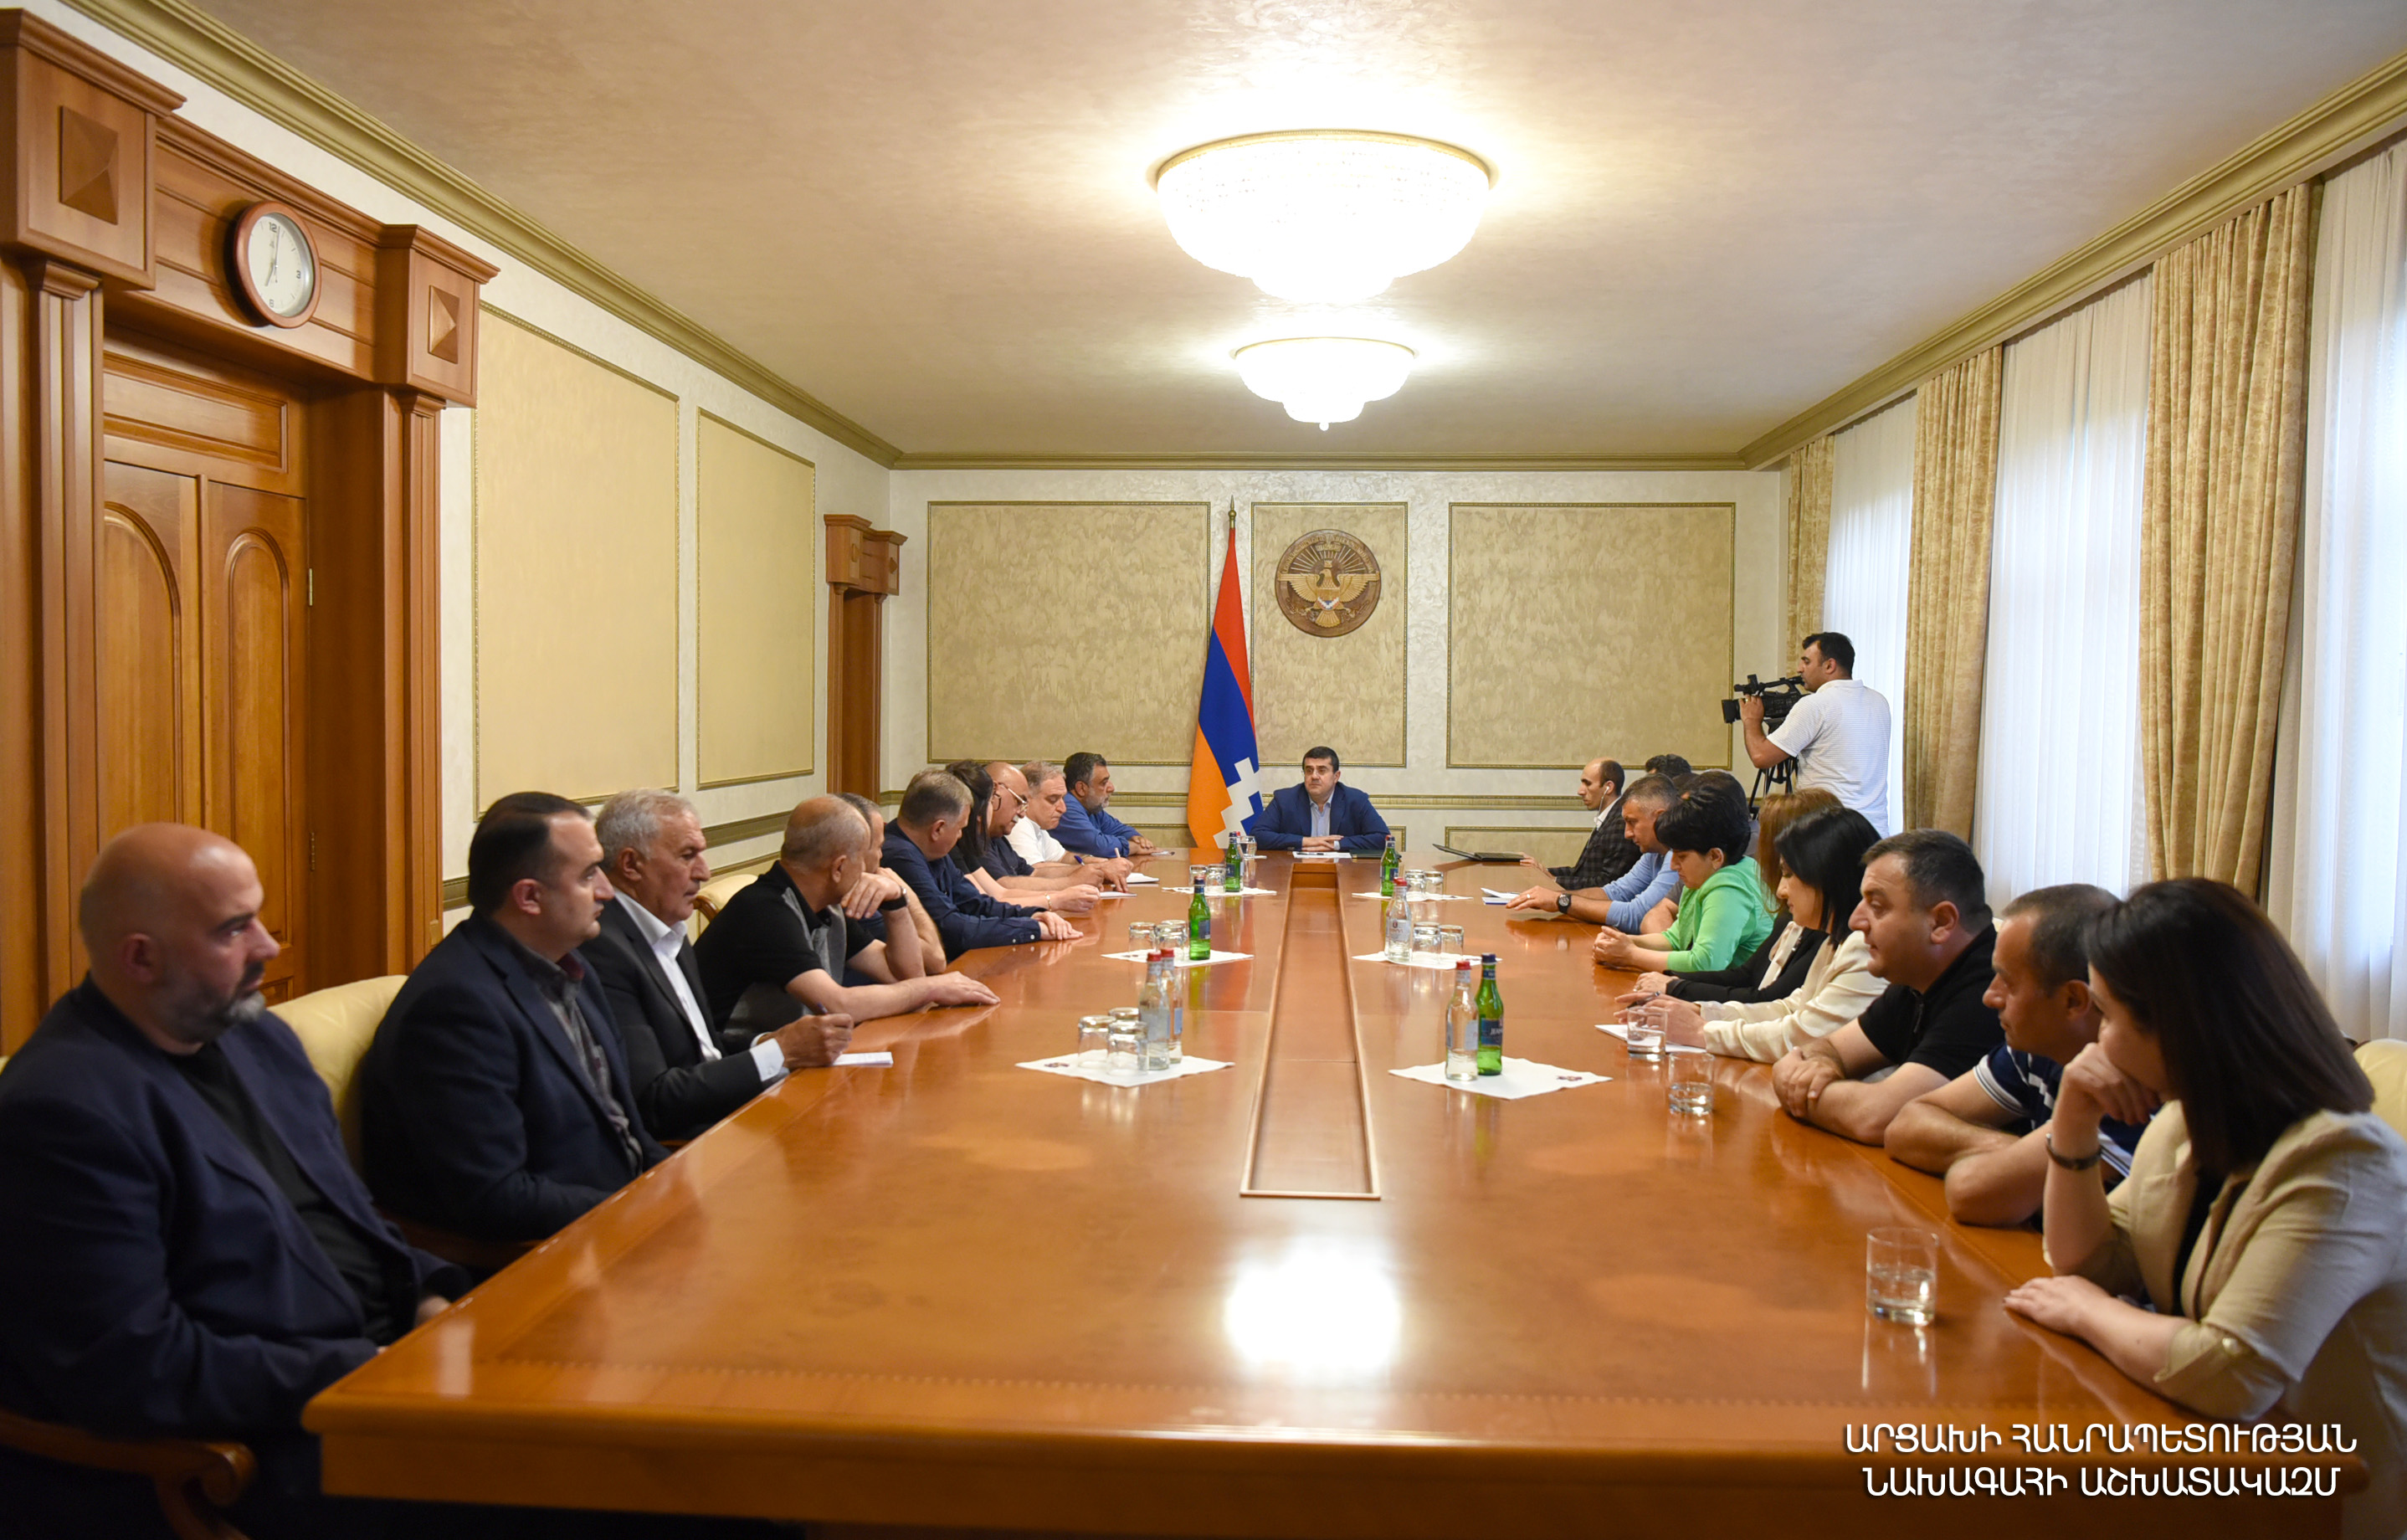 Араик Арутюнян и Рубен Варданян обсудили положения письма, направленного ранее президенту